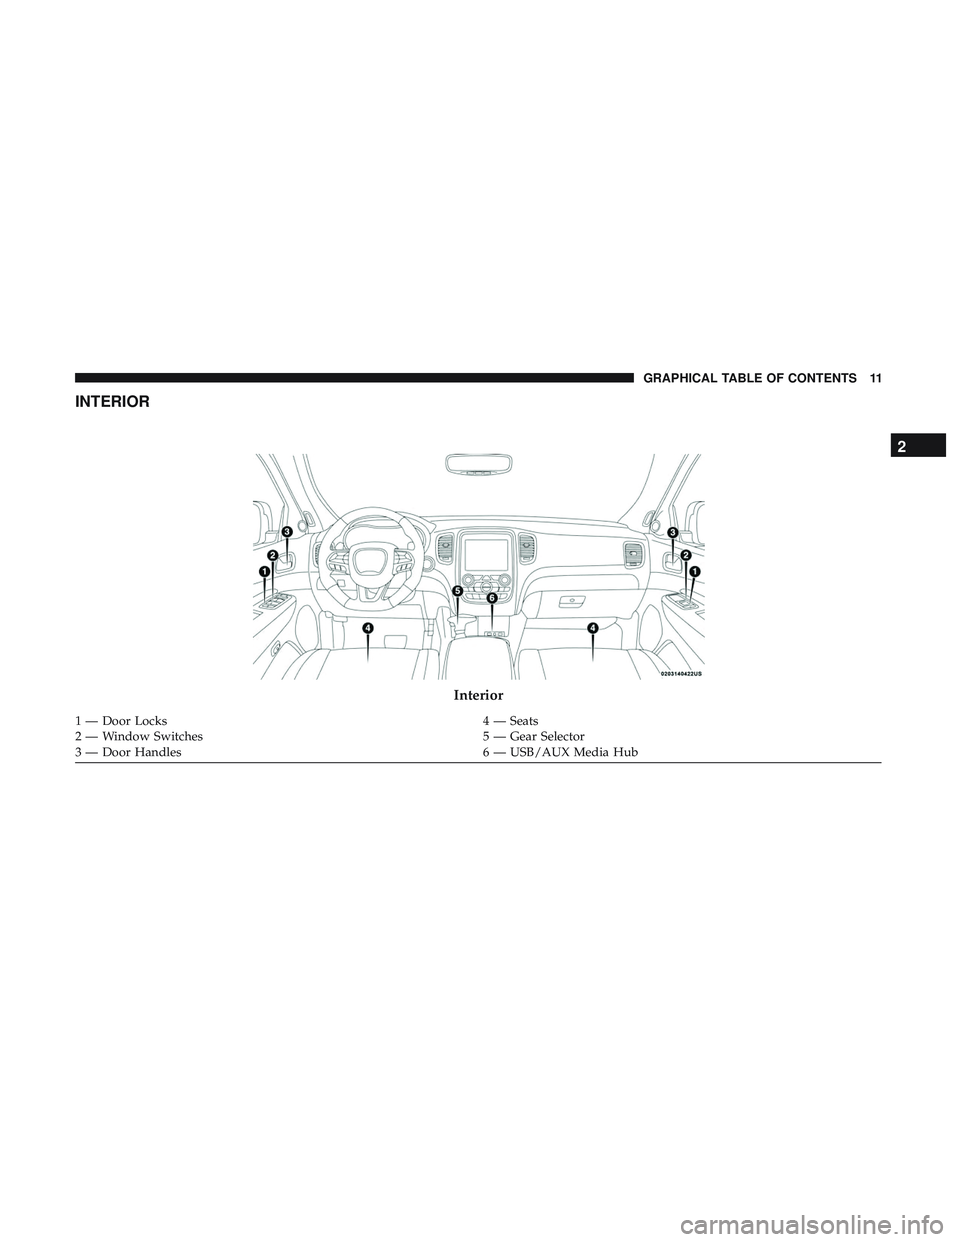 DODGE DURANGO 2018  Owners Manual INTERIOR
Interior
1 — Door Locks4 — Seats
2 — Window Switches 5 — Gear Selector
3 — Door Handles 6 — USB/AUX Media Hub
2
GRAPHICAL TABLE OF CONTENTS 11 